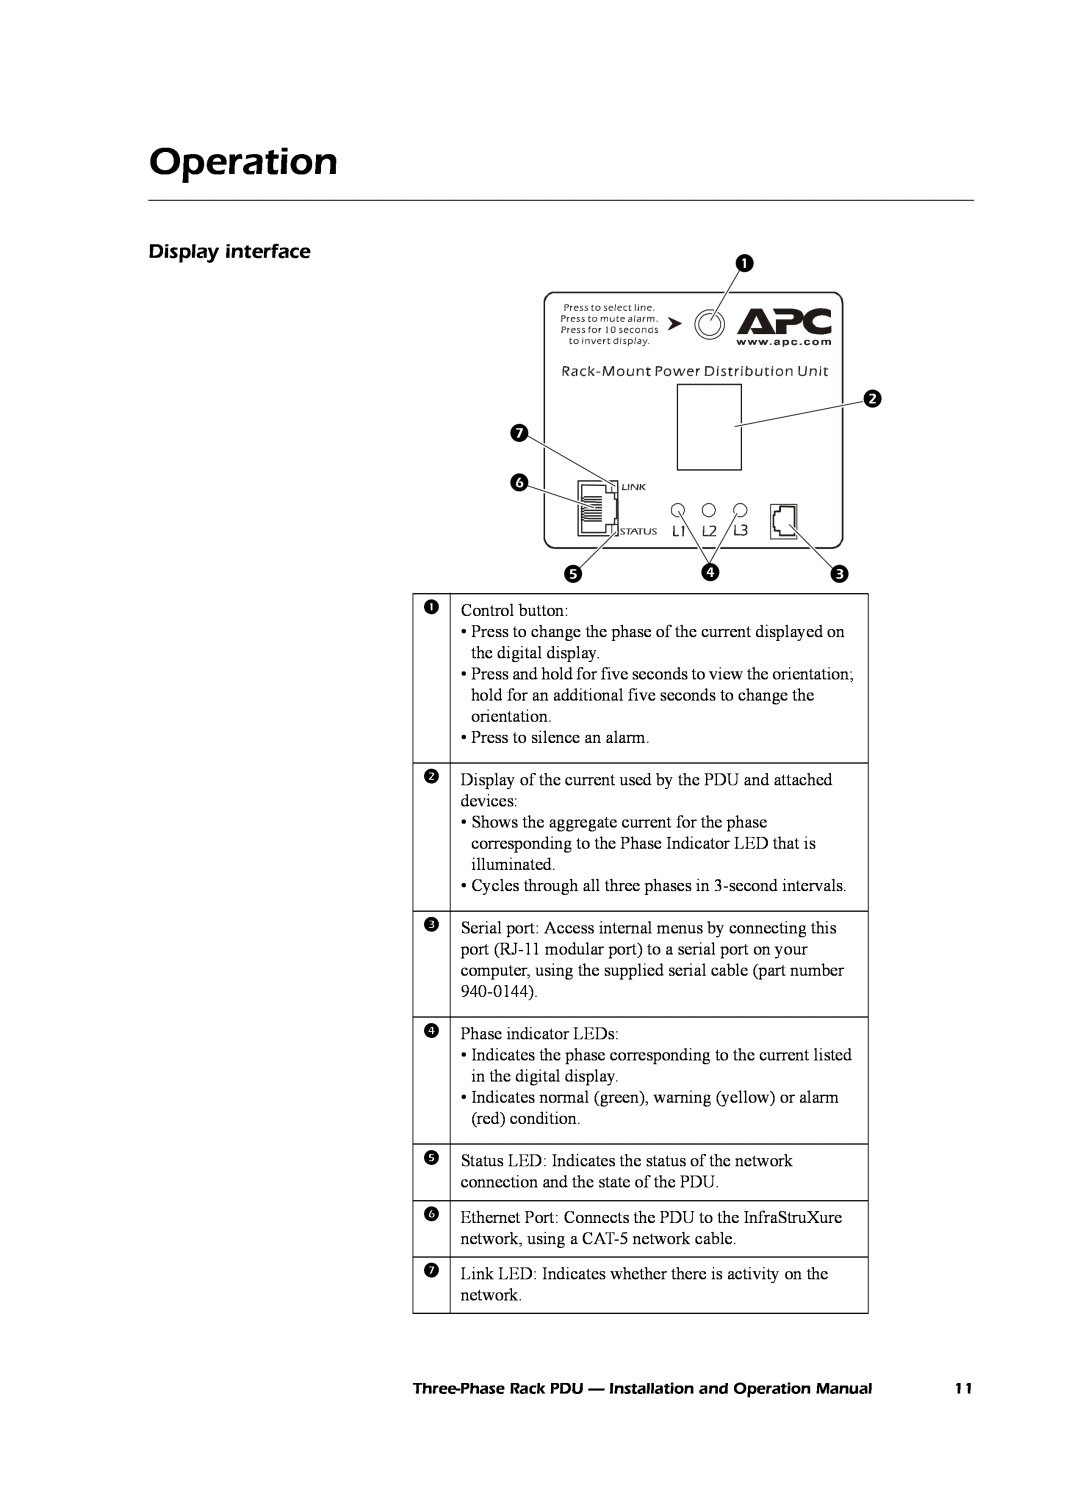 American Power Conversion AP7608, AP7602, AP7601 operation manual Operation, Display interface 